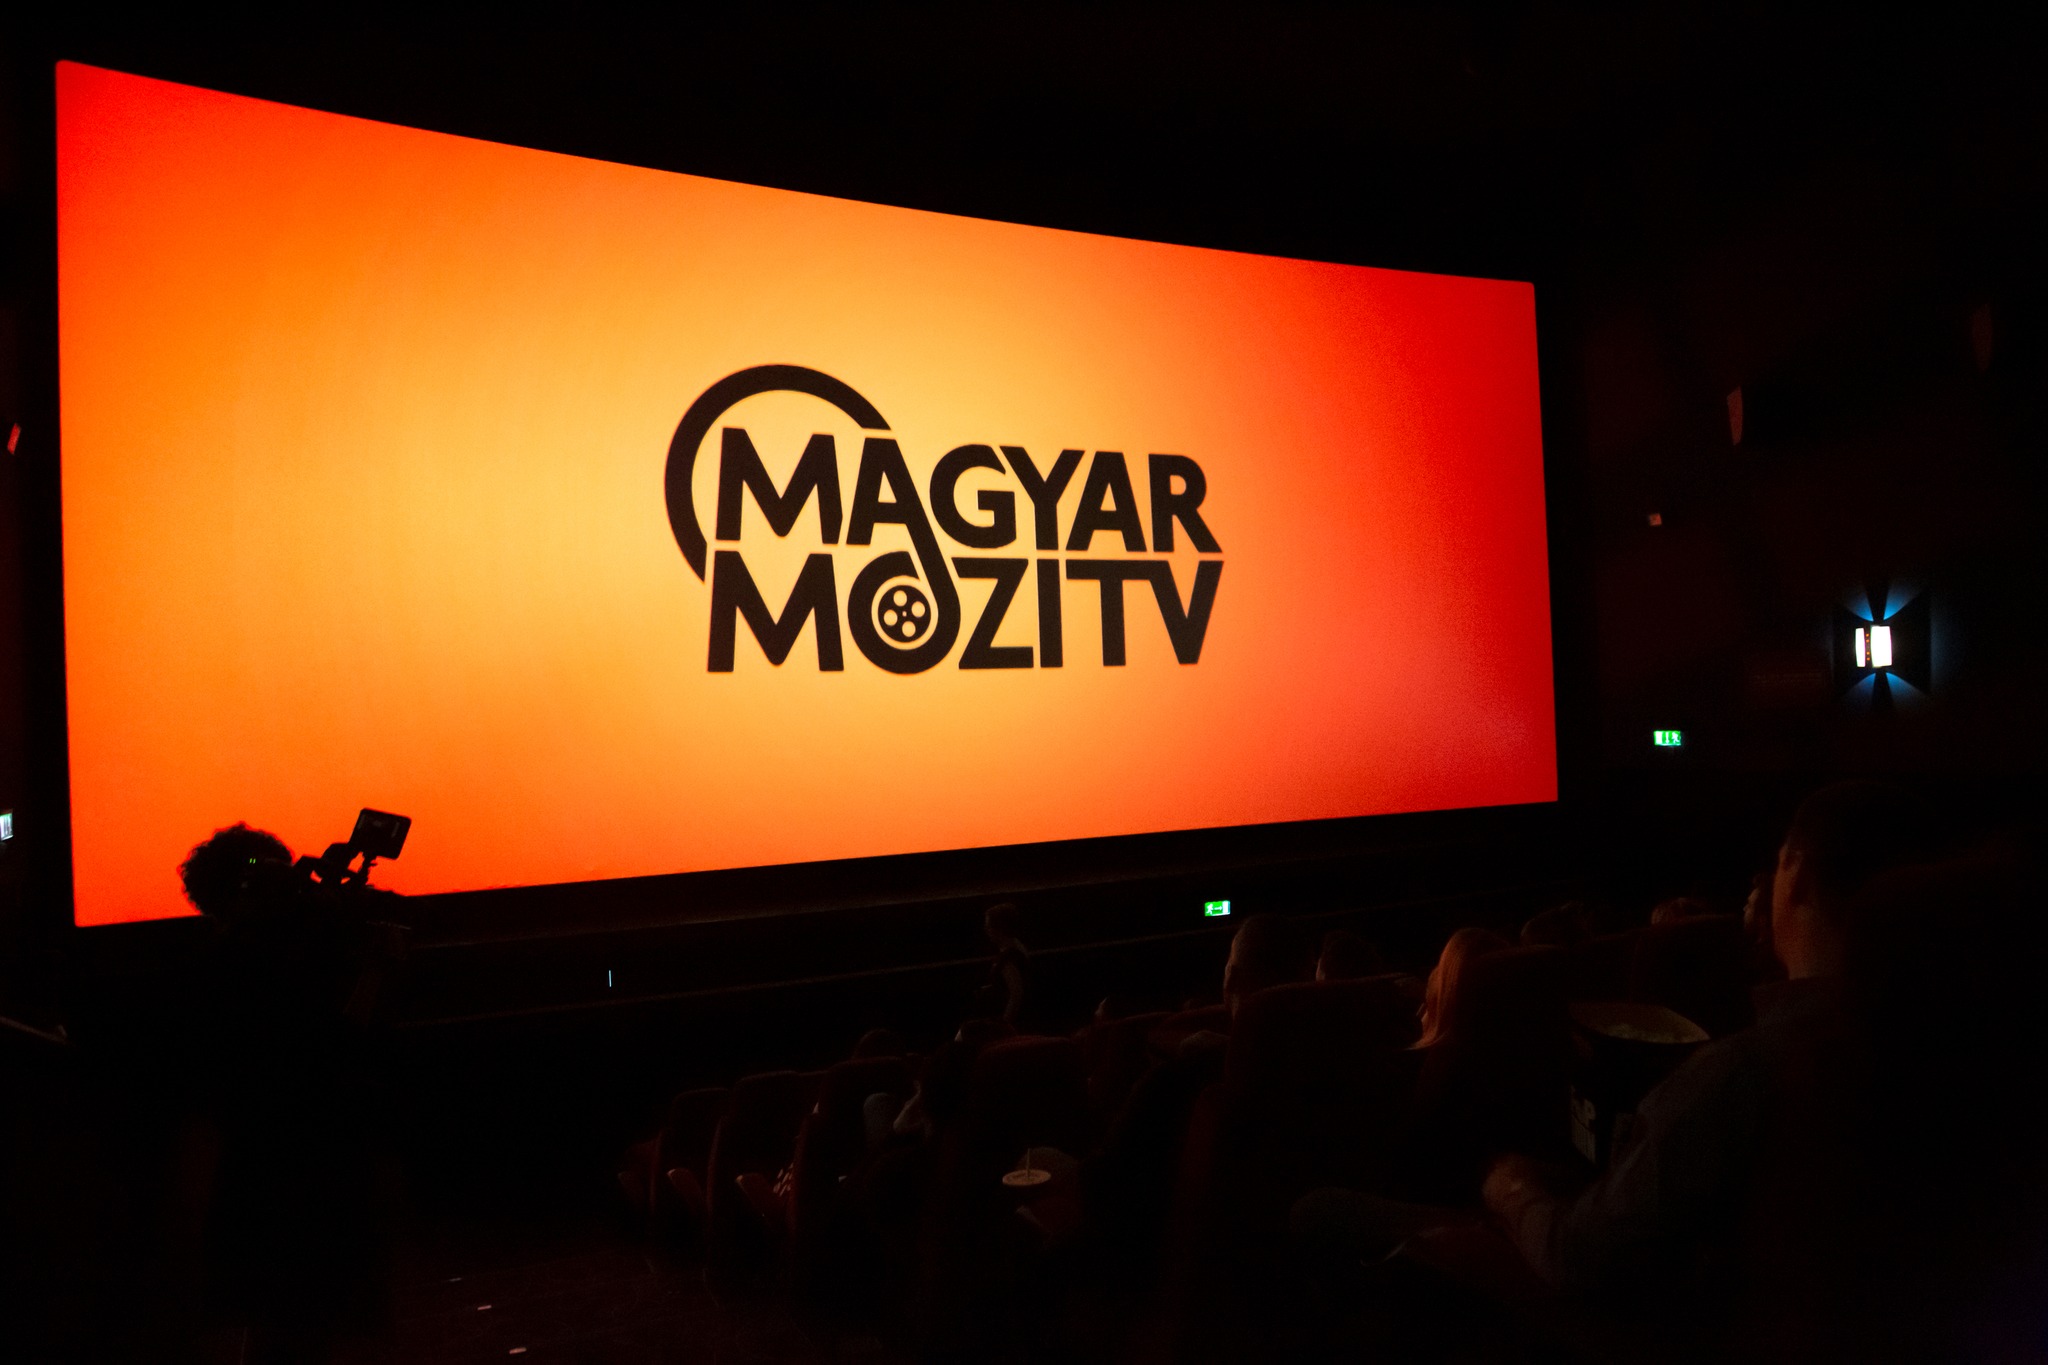 Нова угорська телепрограма Magyar Mozi